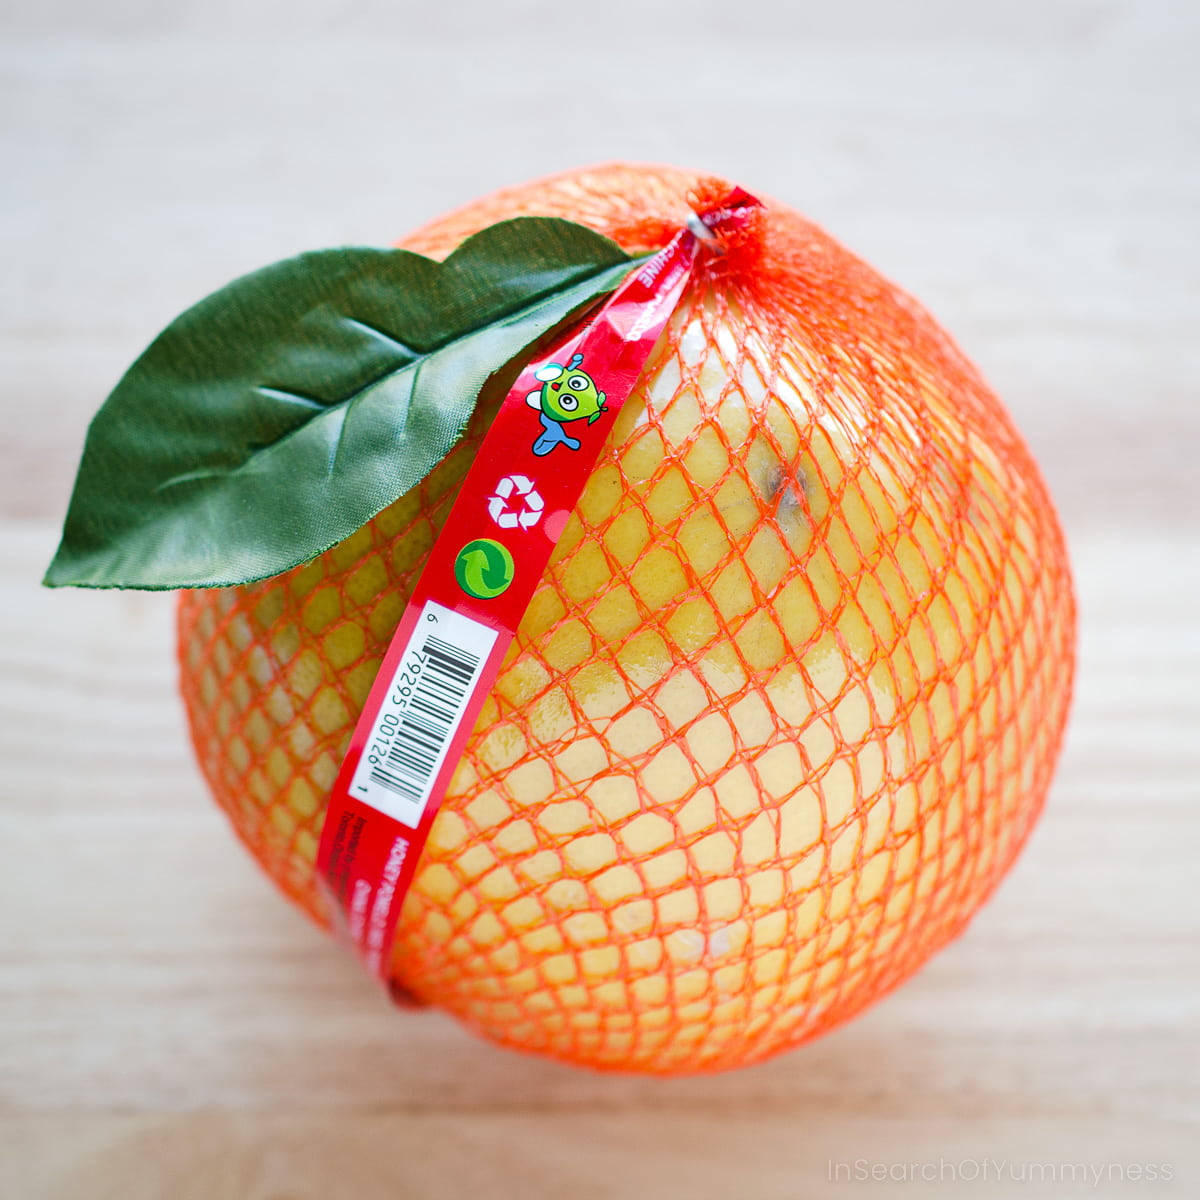 Freshly Wrapped Pomelo Fruit Ready for Transport Wallpaper